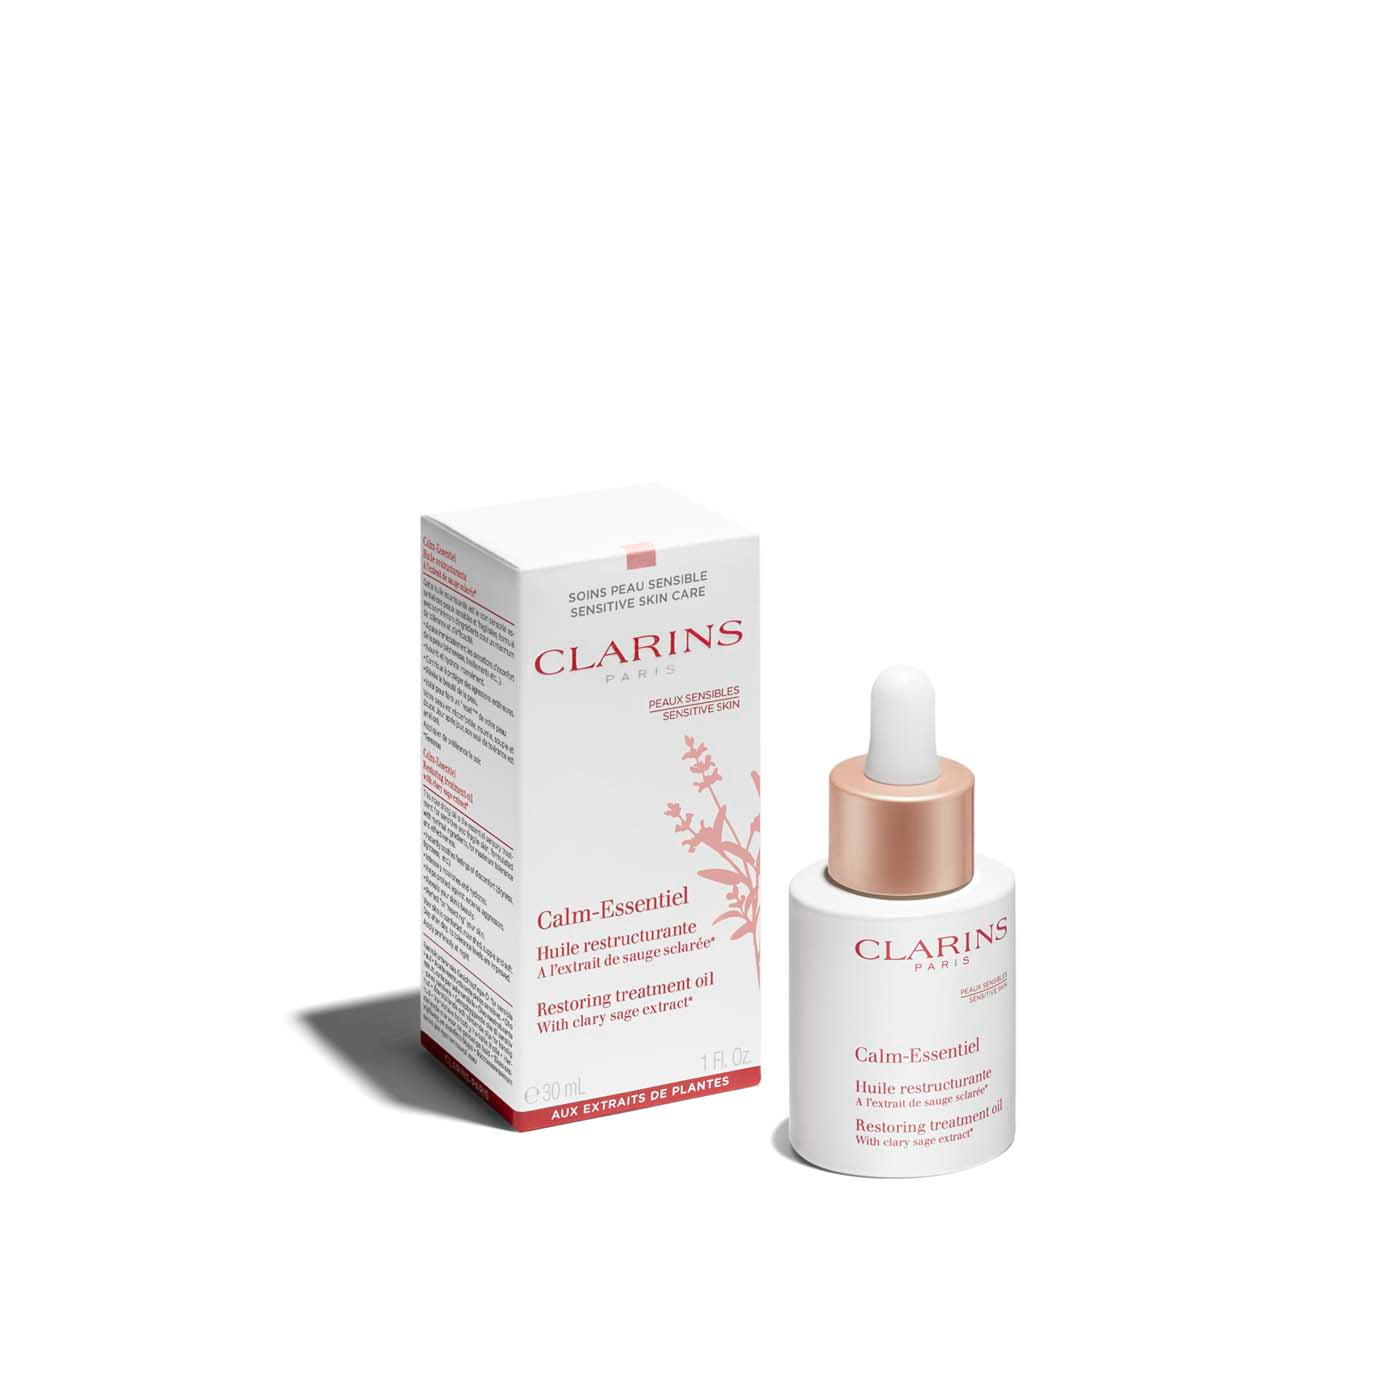 CLARINS Calm-Essentiel Restoring Treatment Oil 30mL